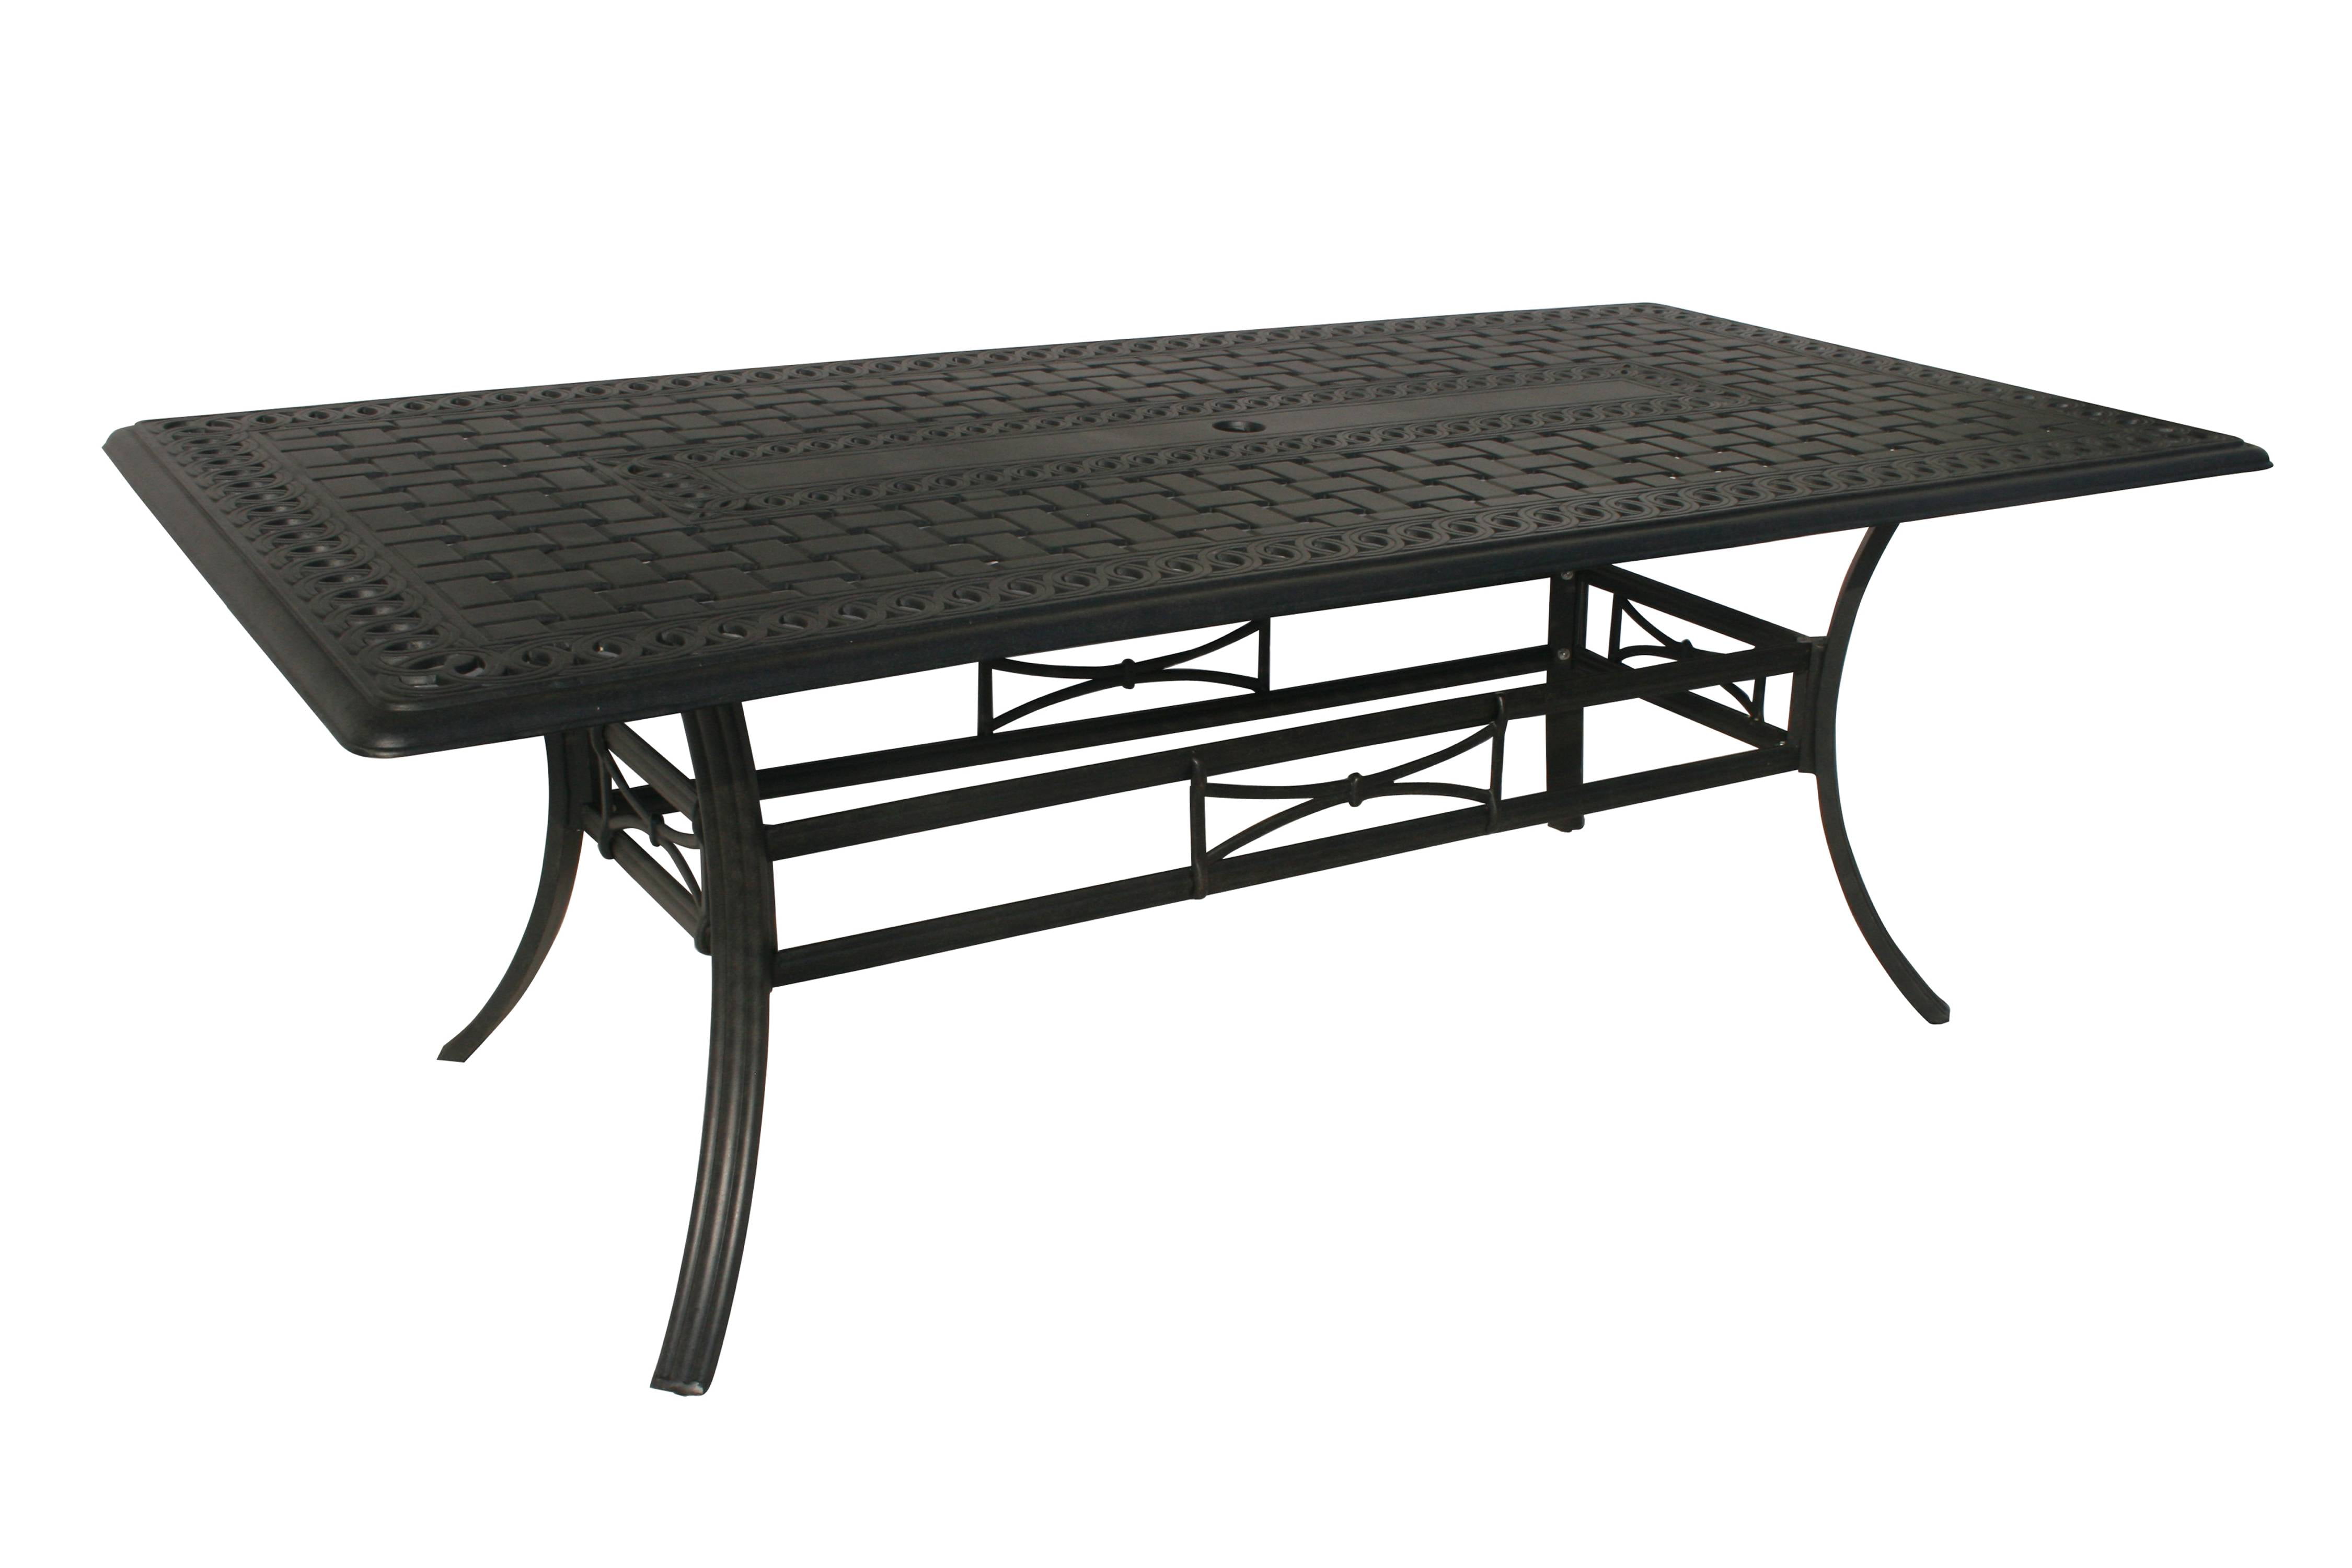 84 Jet Black Rectangular Aluminum Outdoor Patio Dining Table W Umbrella Hole Com - Patio Furniture Table With Umbrella Hole